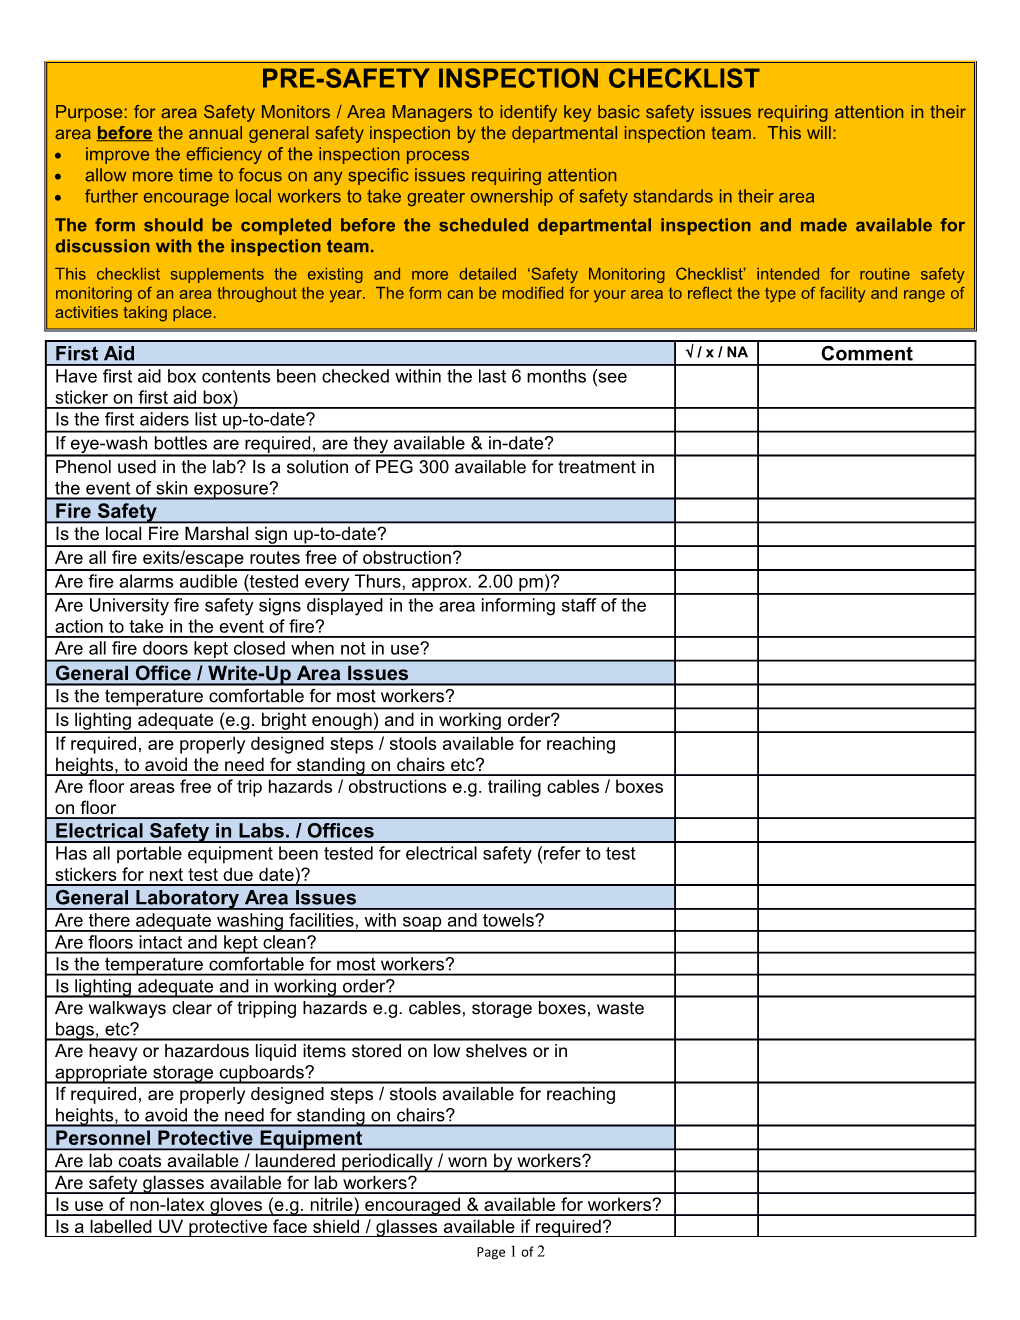 Pre-Safety Inspection Checklist